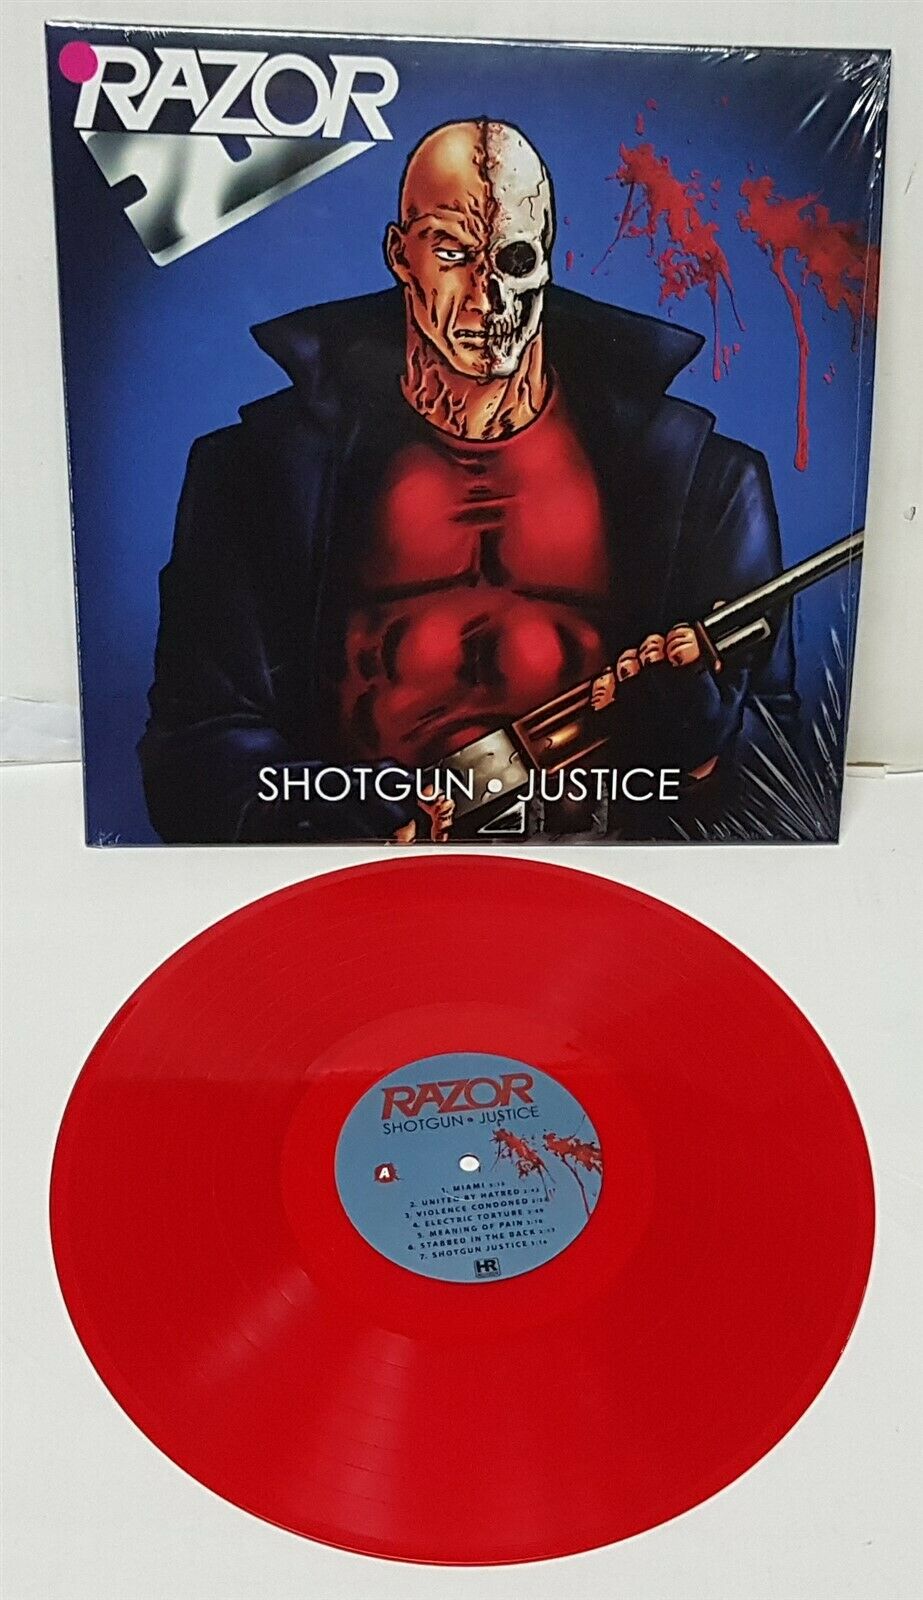 popsike.com - Razor Shotgun Justice RED Vinyl LP Record new 